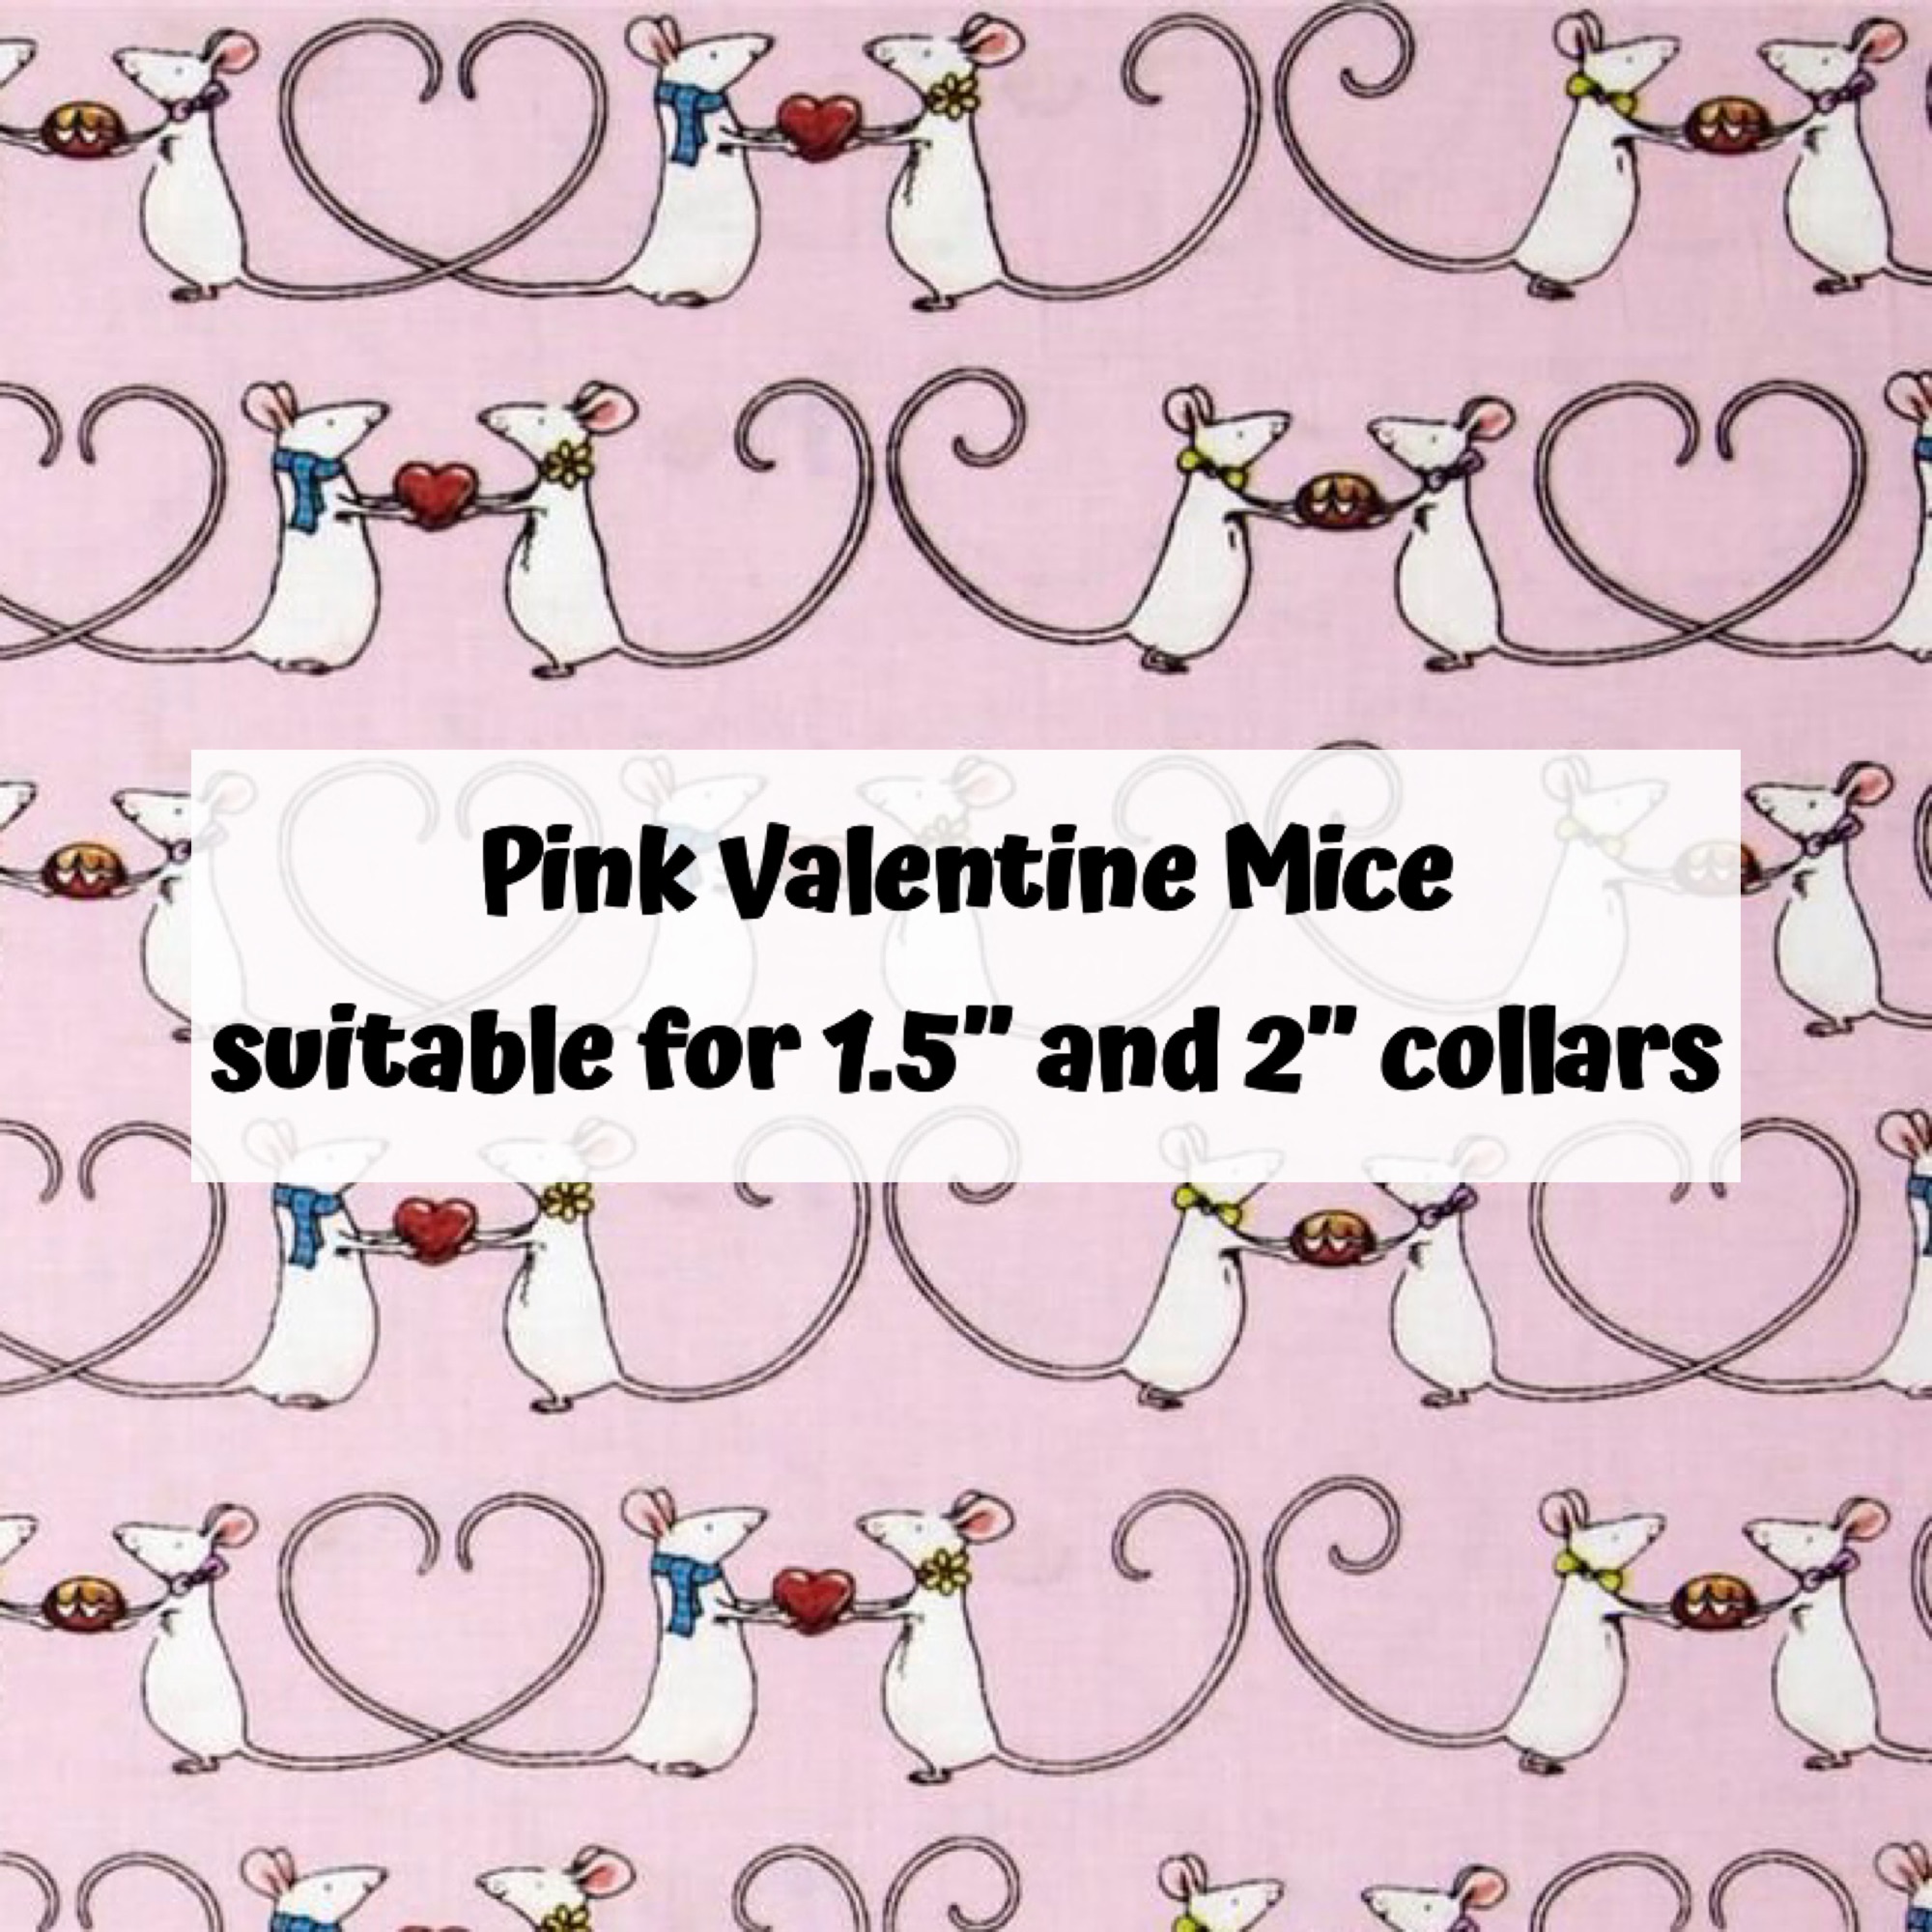 Pink Valentine Mice